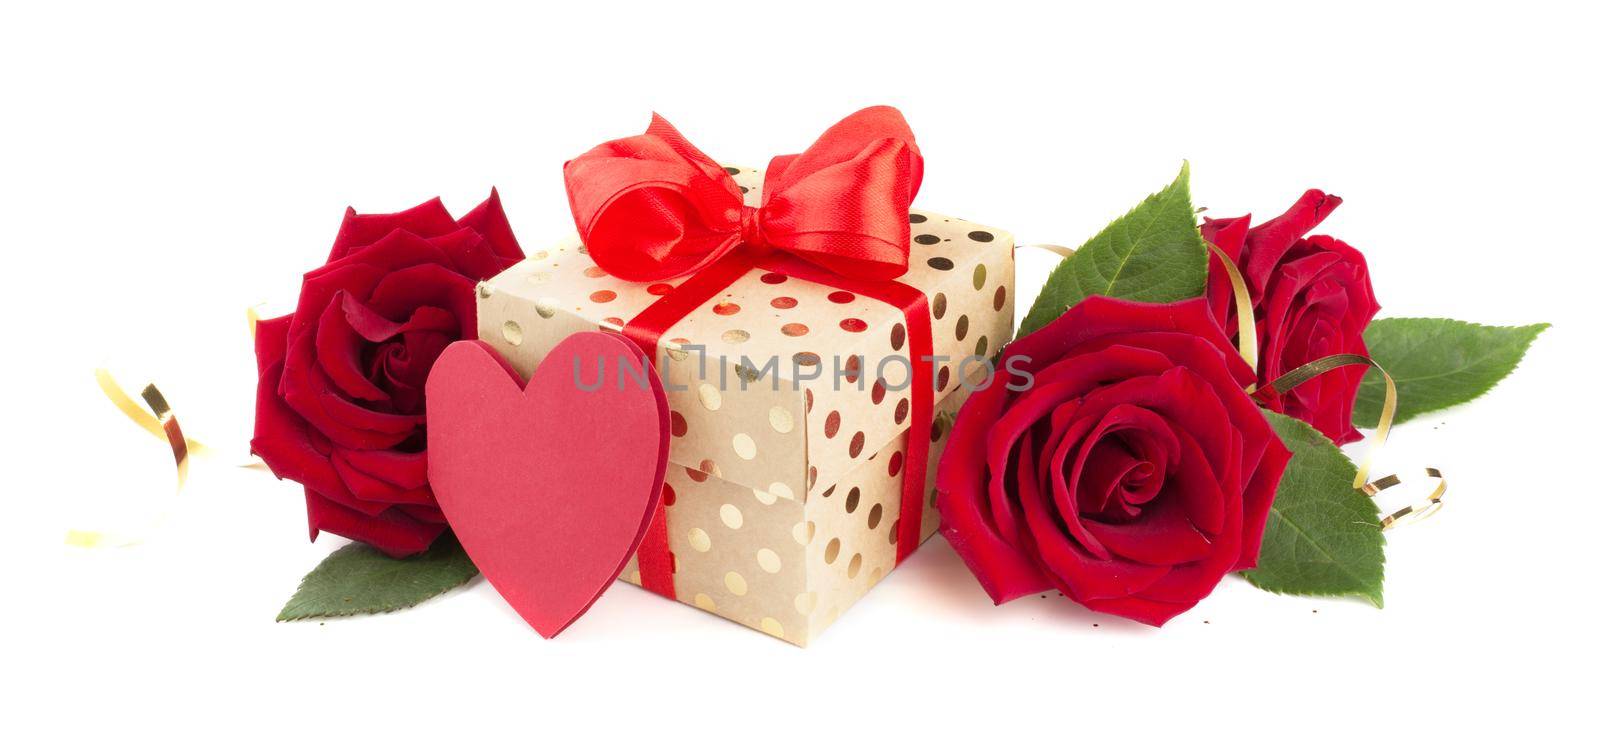 Valentine day gift and flowers by destillat